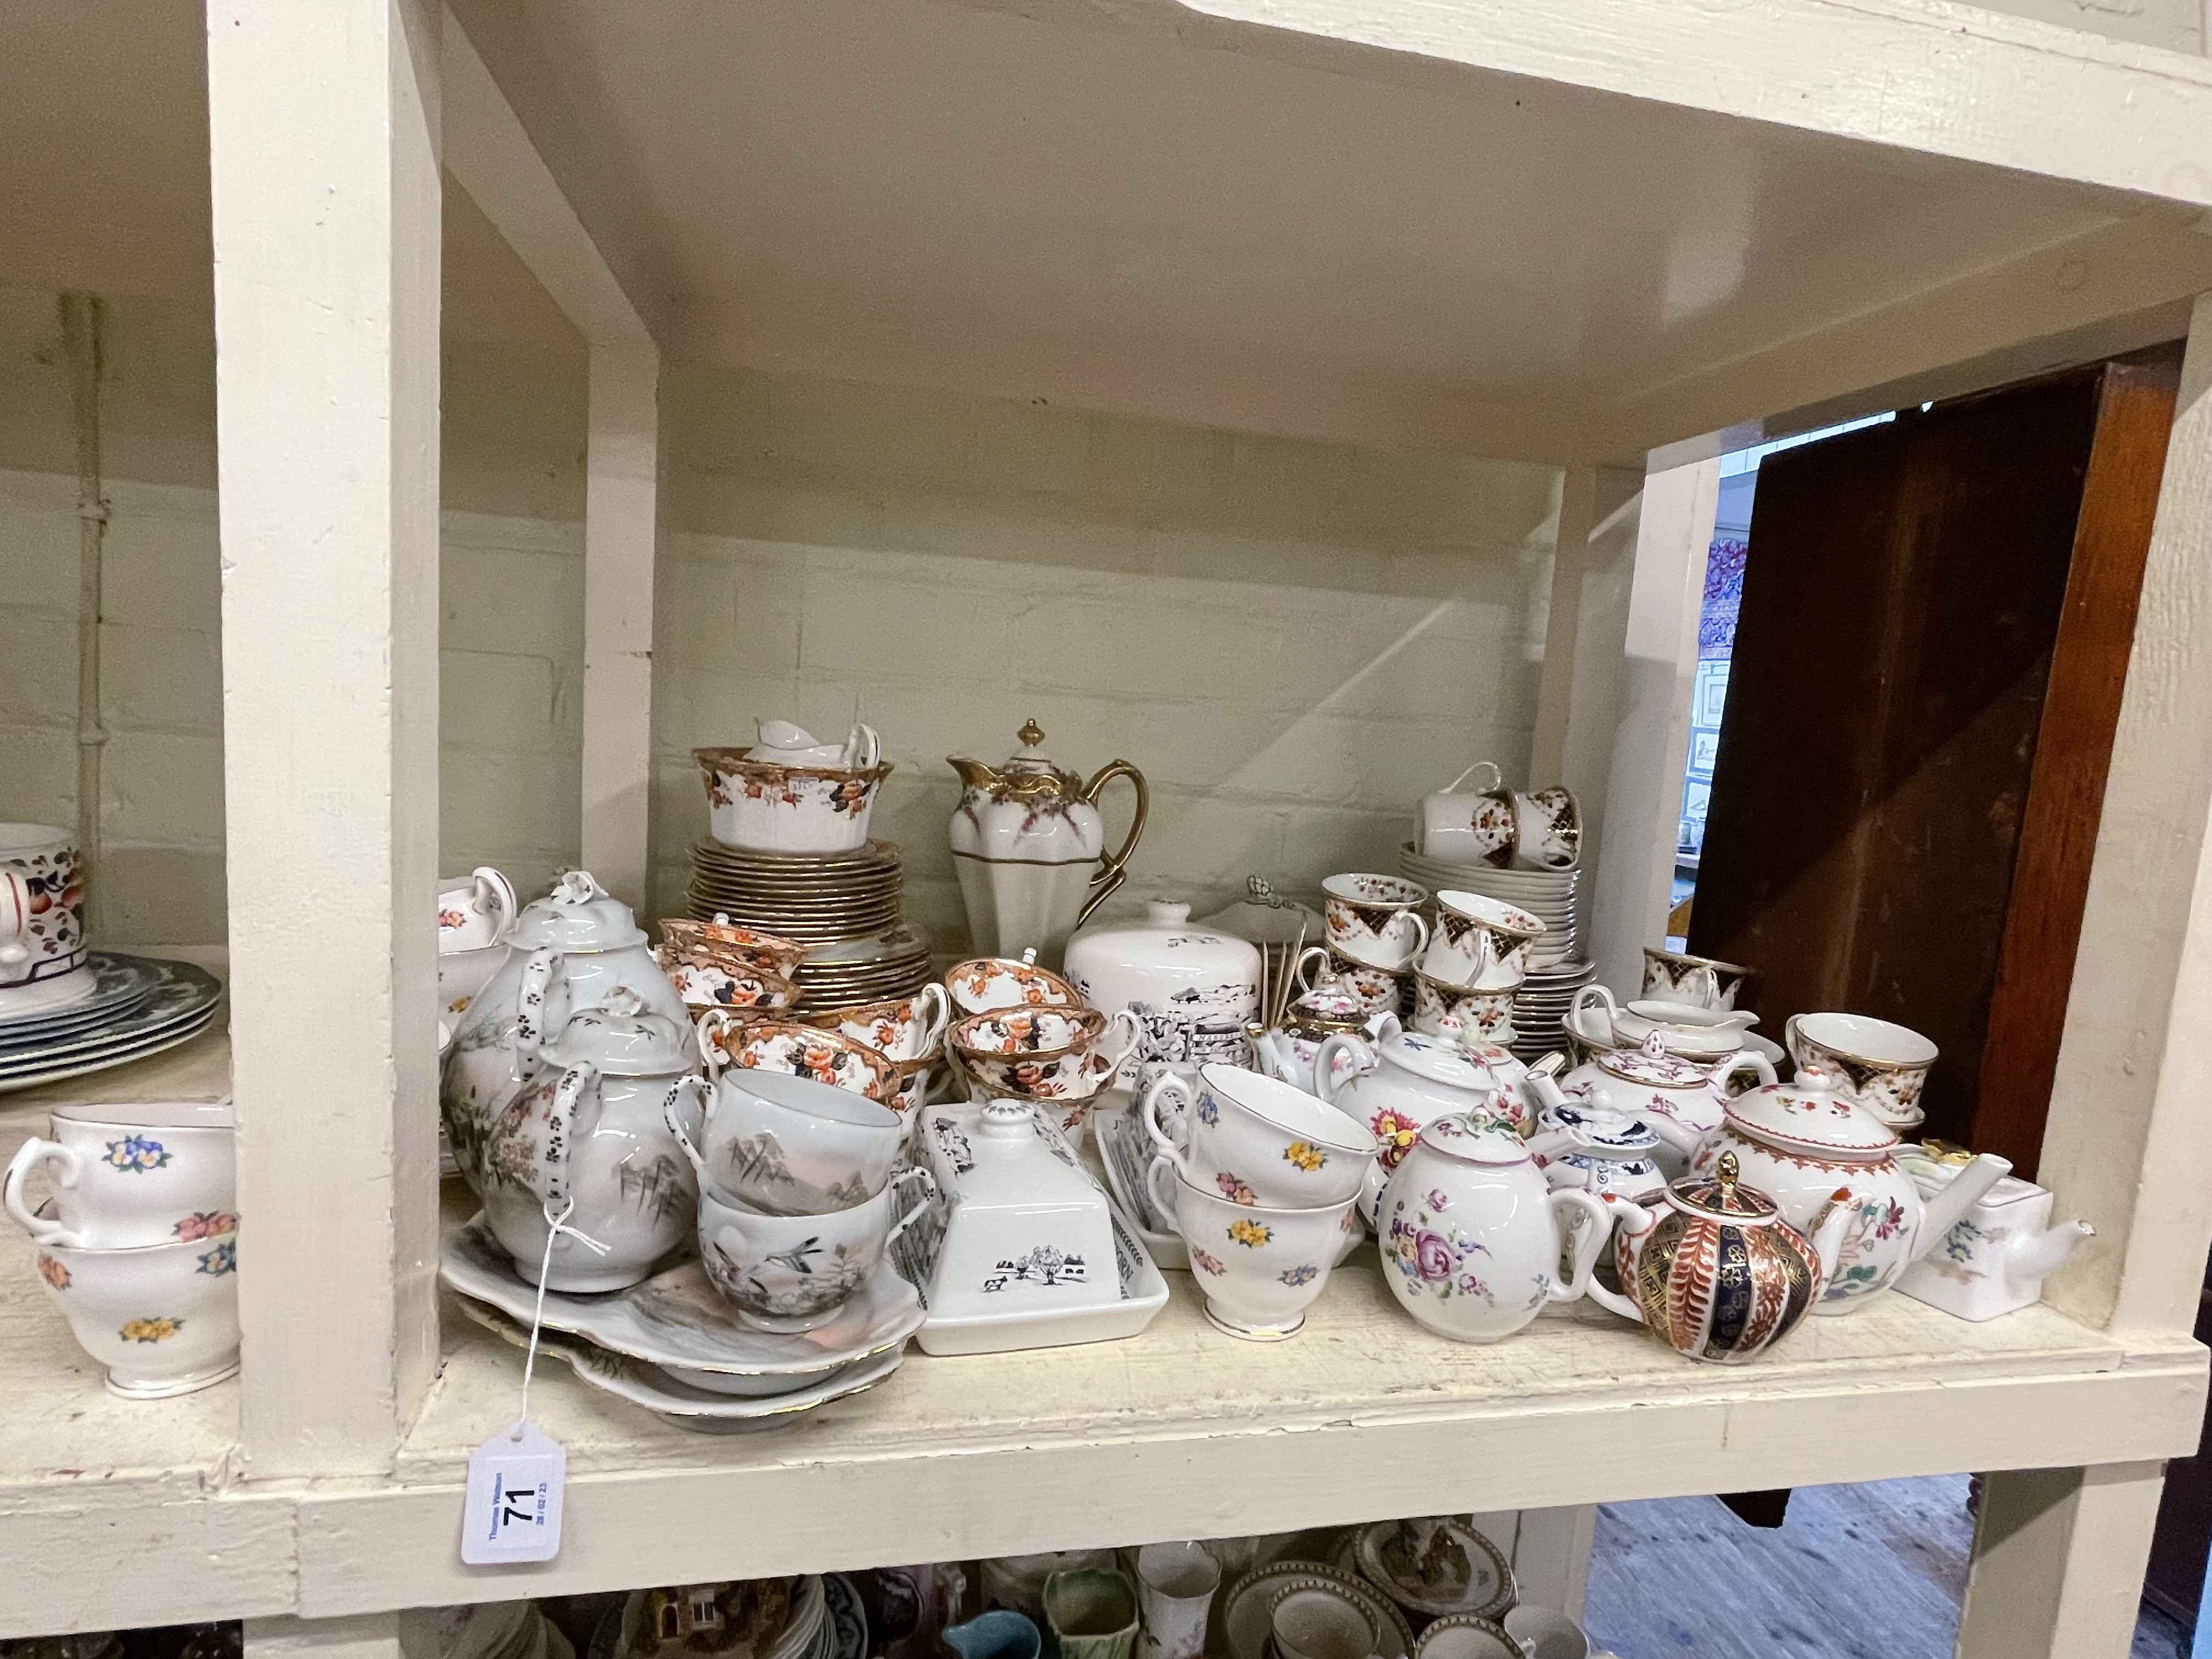 E Hughes tea china and other tea wares, replica 'antique' teapots, etc.